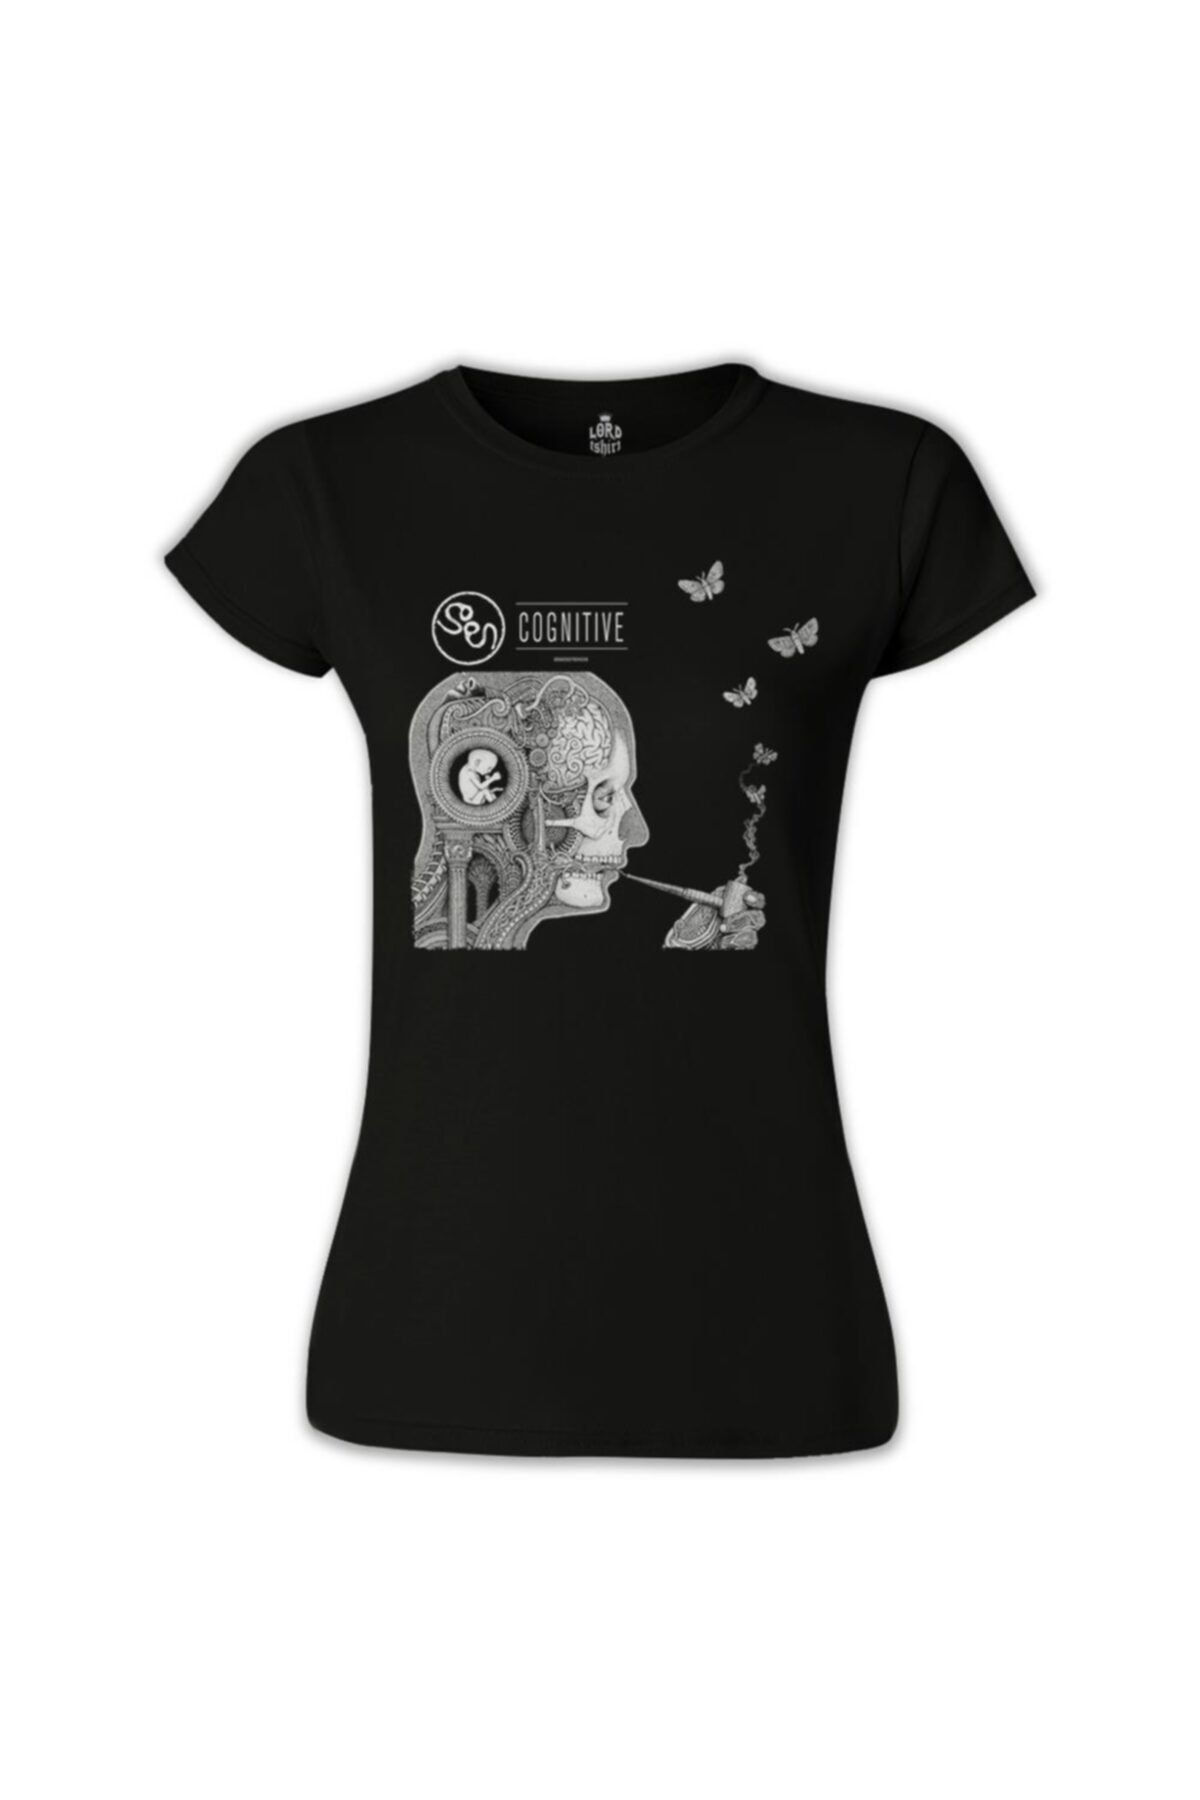 Lord T-Shirt Kadın Siyah Soen Cognitive T-Shirt - BS-1100